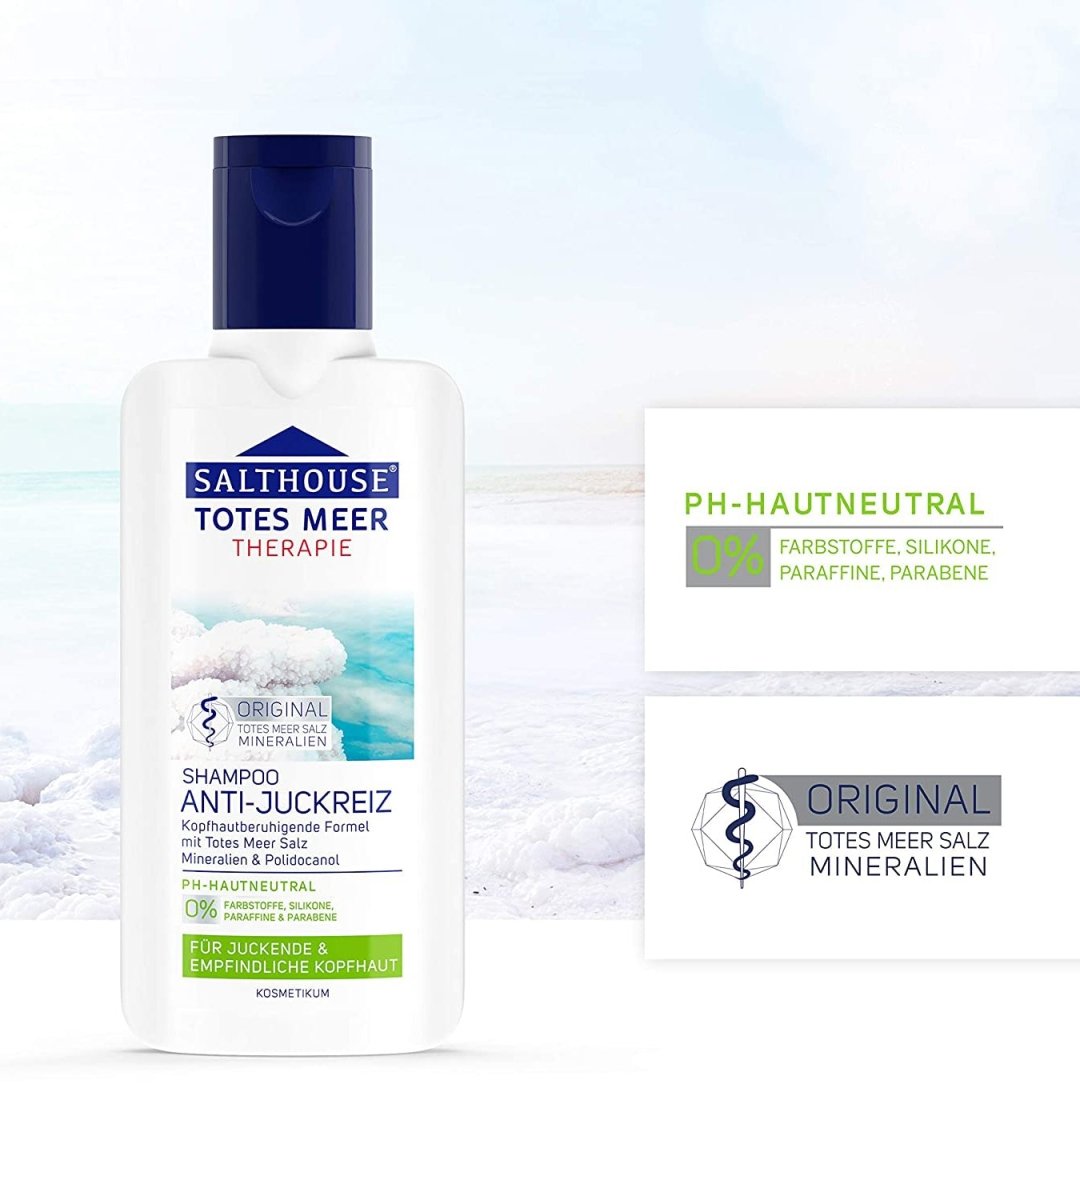 Salthouse TotesMeer-Salz-Therapie Anti-Juckreiz Shampoo Ph-Hautneutral 250ml